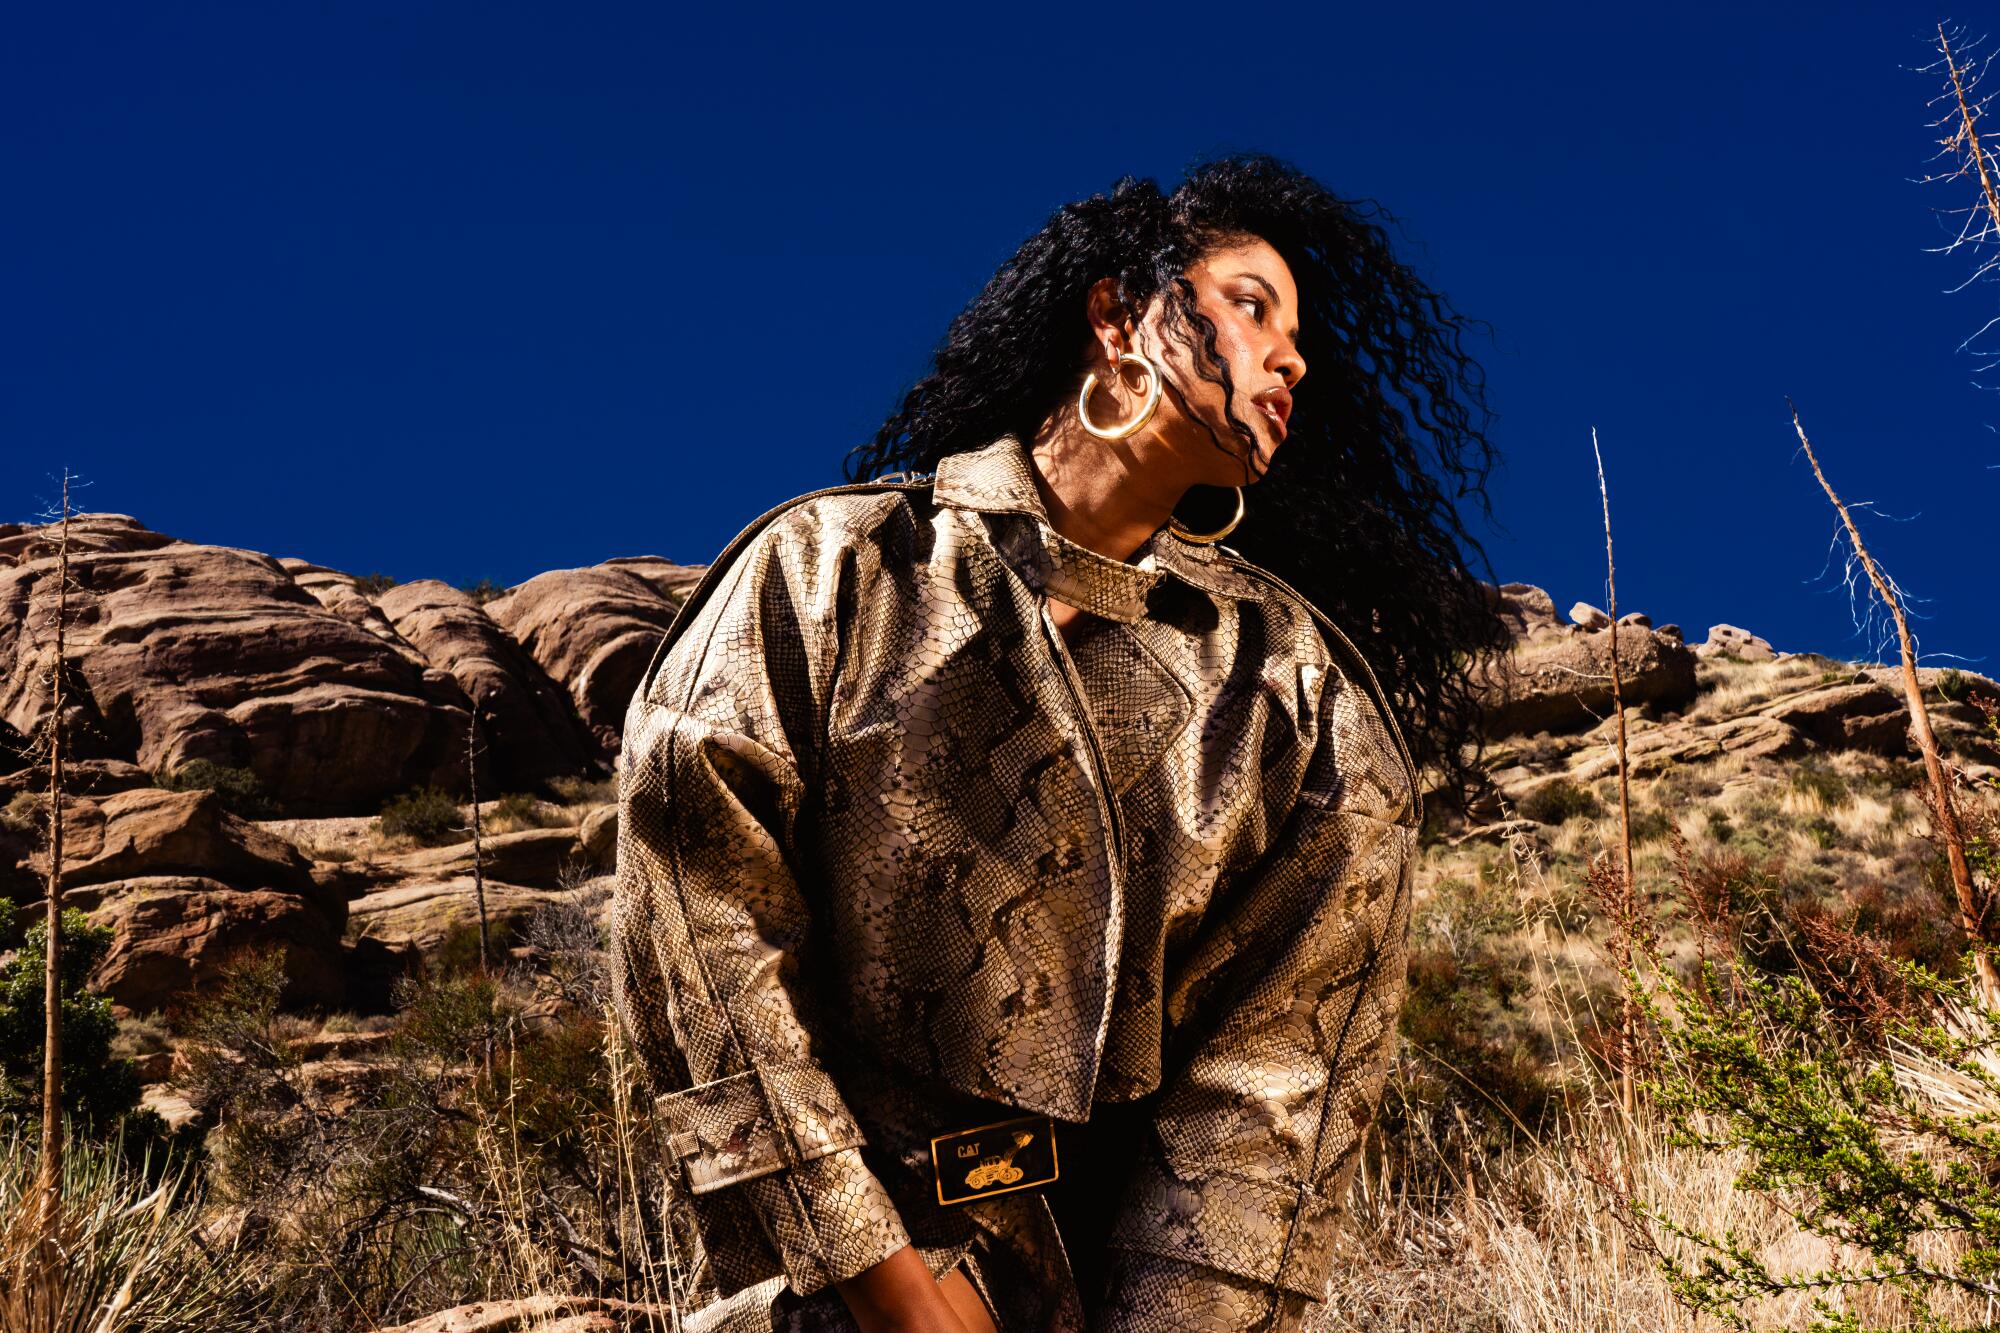 Yendry poses in a snake skin jacket in the desert.